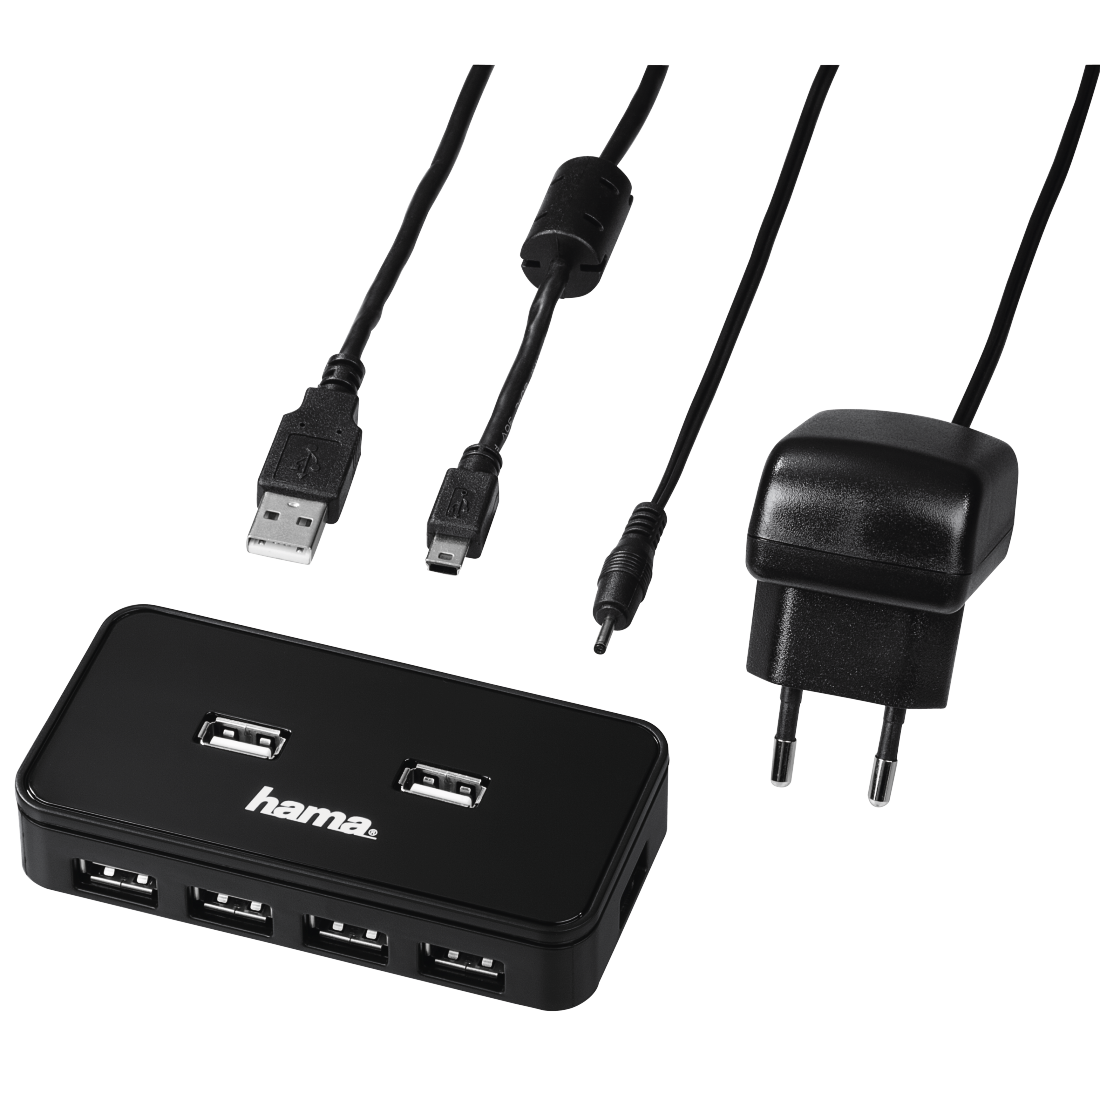 00039859 Hama USB 2.0 Hub 1:7, with power supply, black, cardboard box